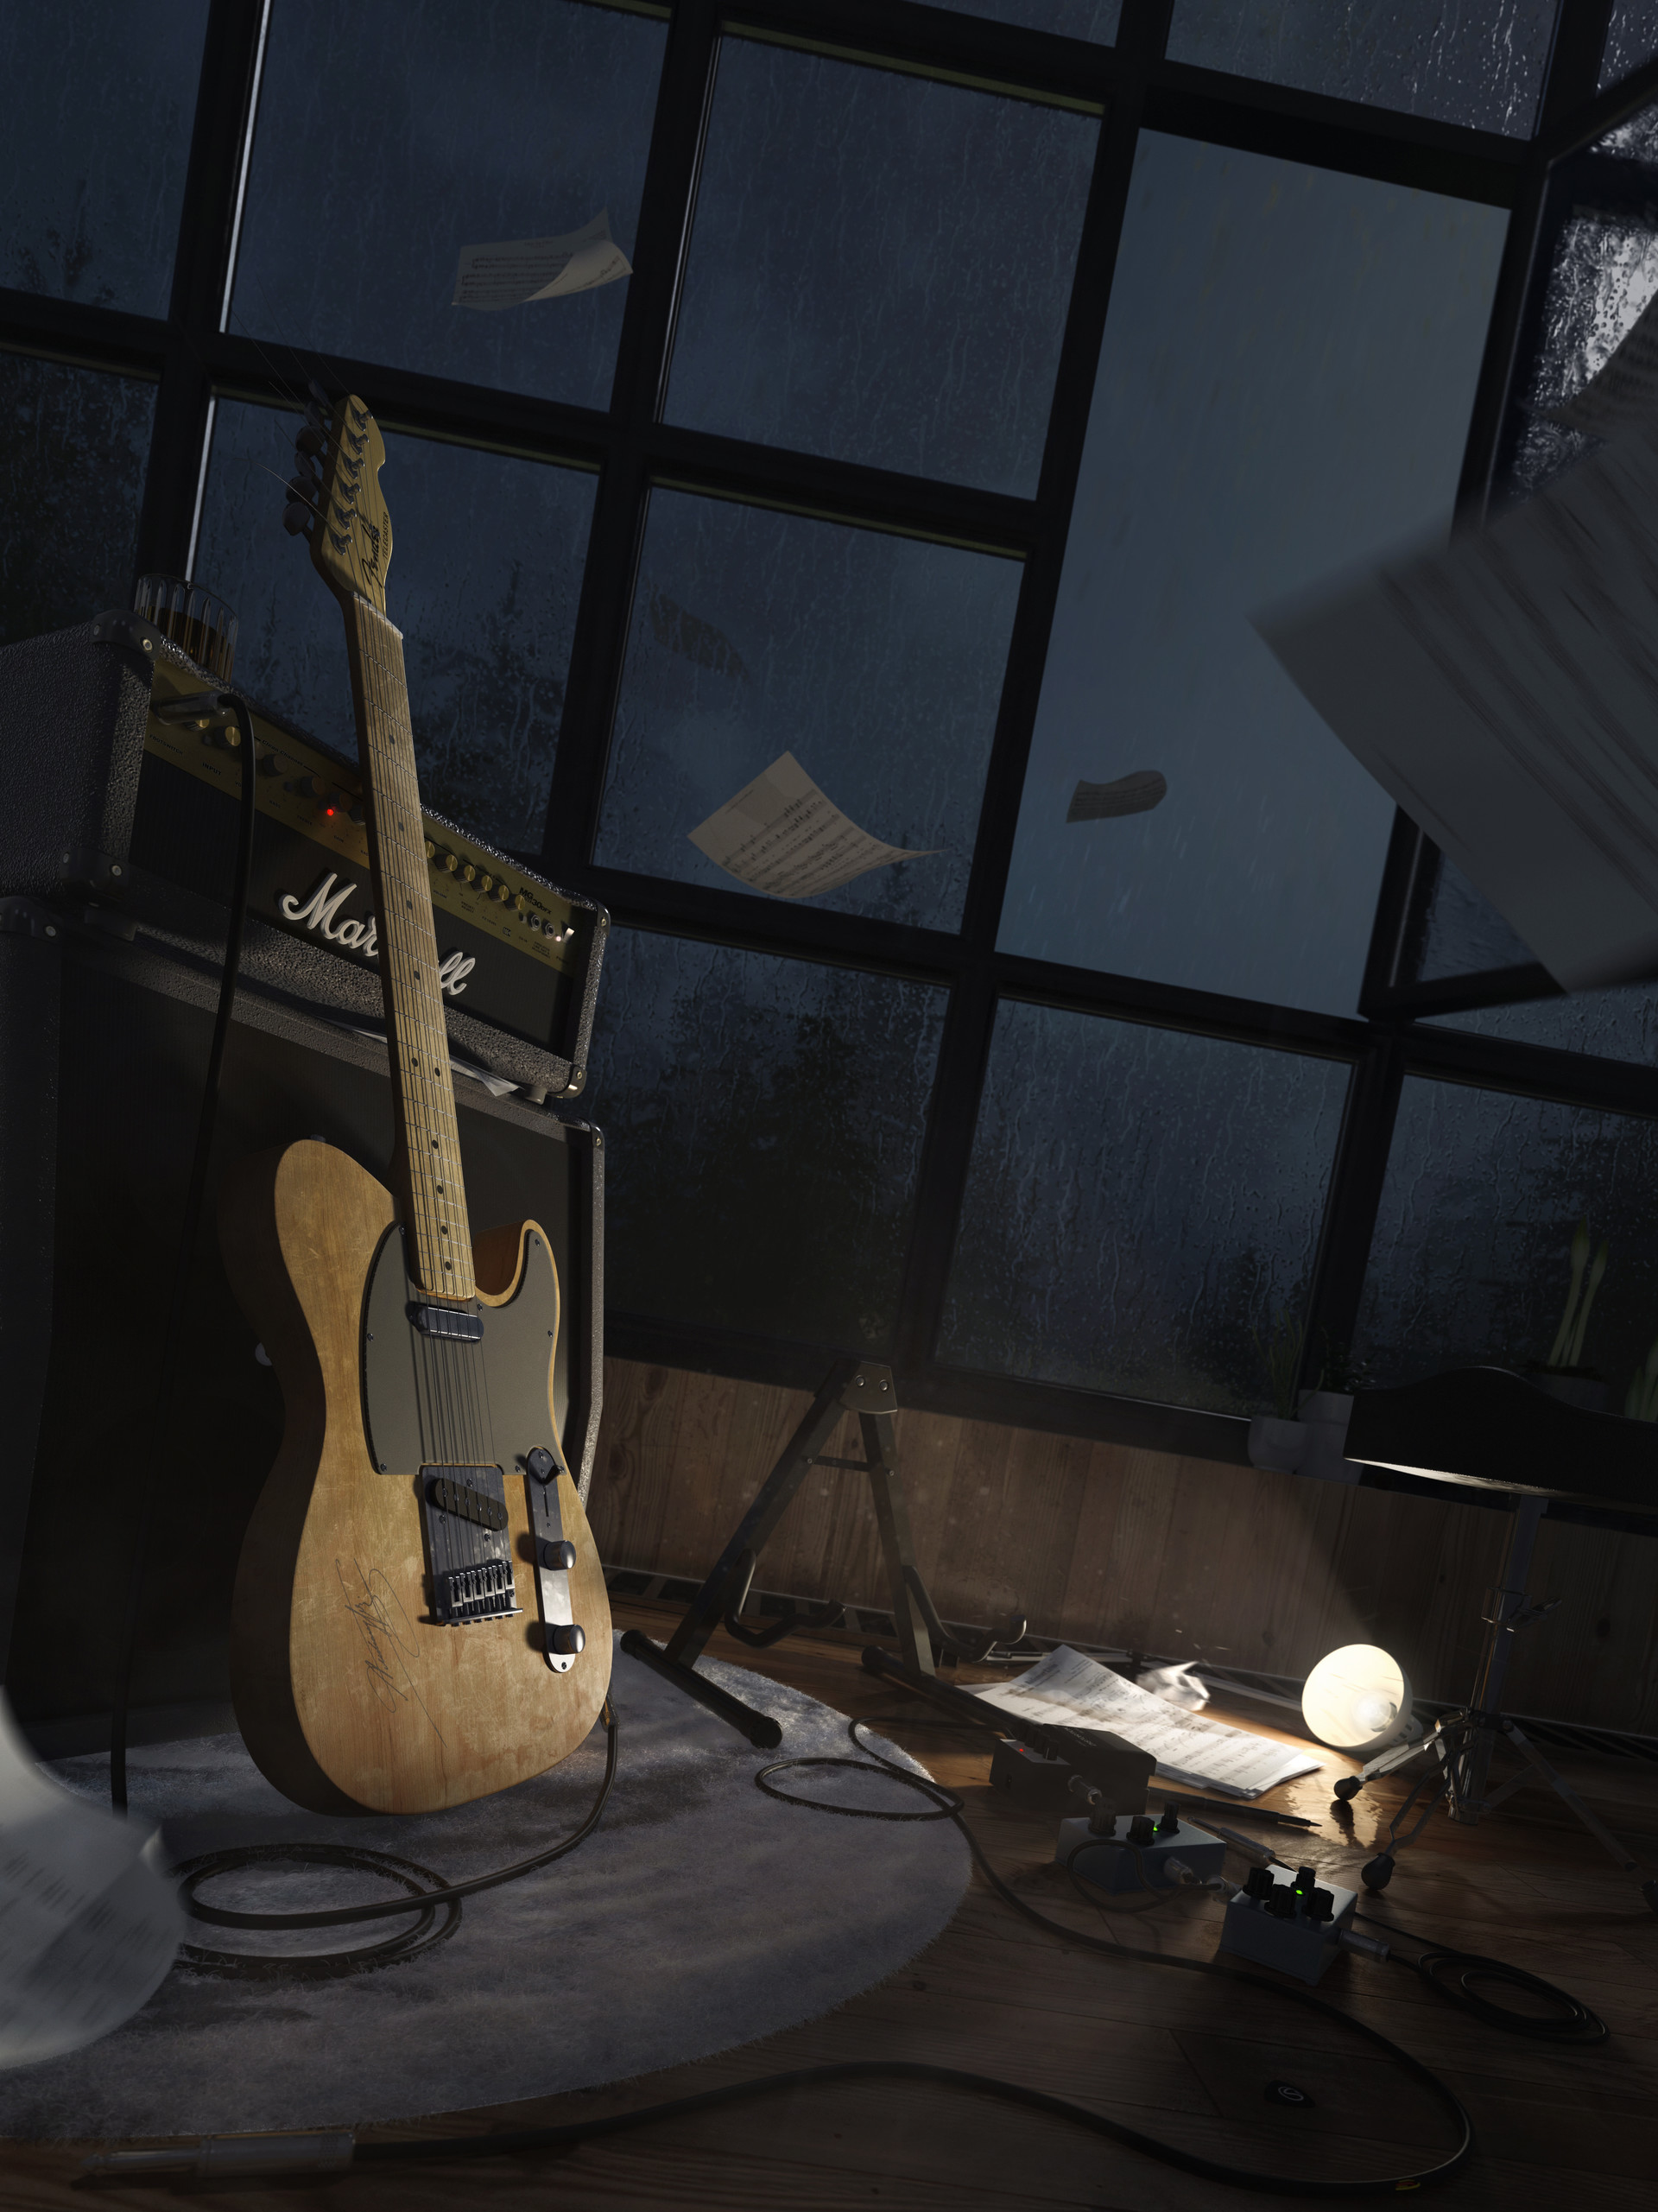 electric guitar, guitar, musical instrument, paper, amplifier, music, window